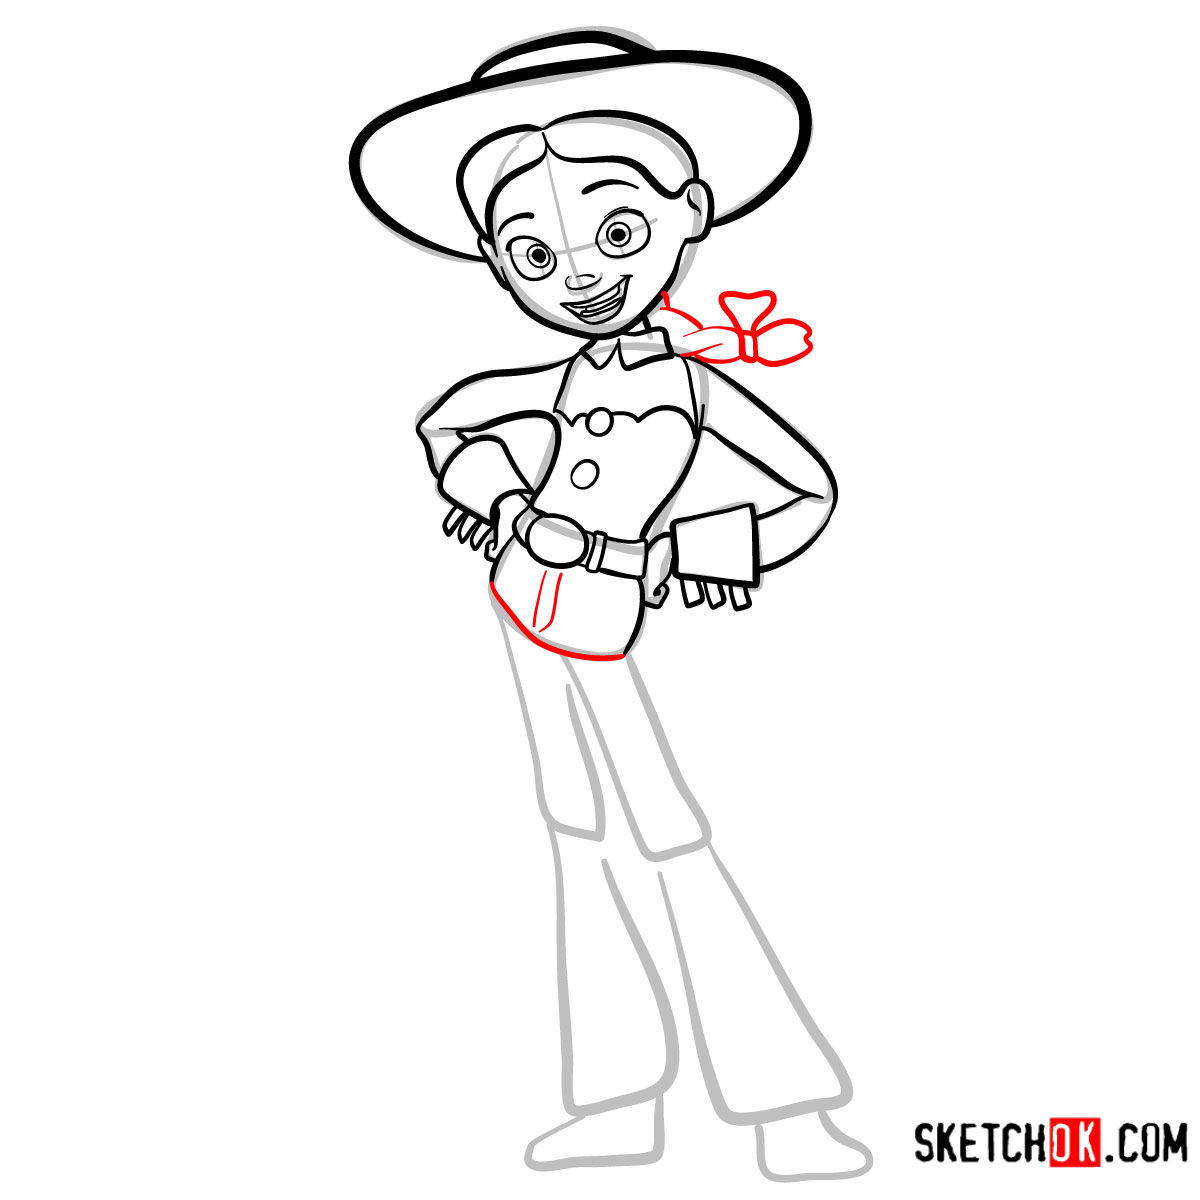 How to draw Jessie from Toy Story 2 - step 10